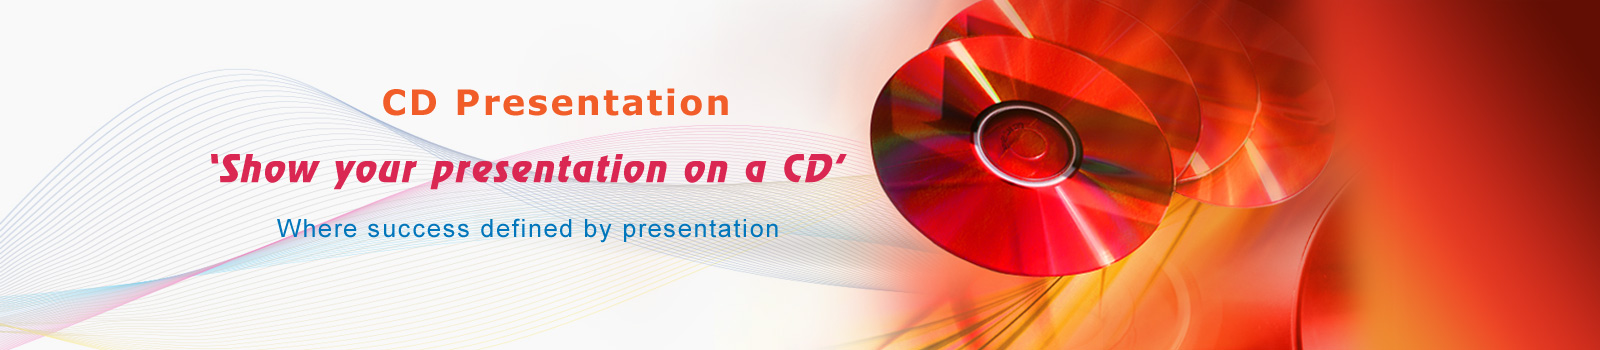 CD Presentation 